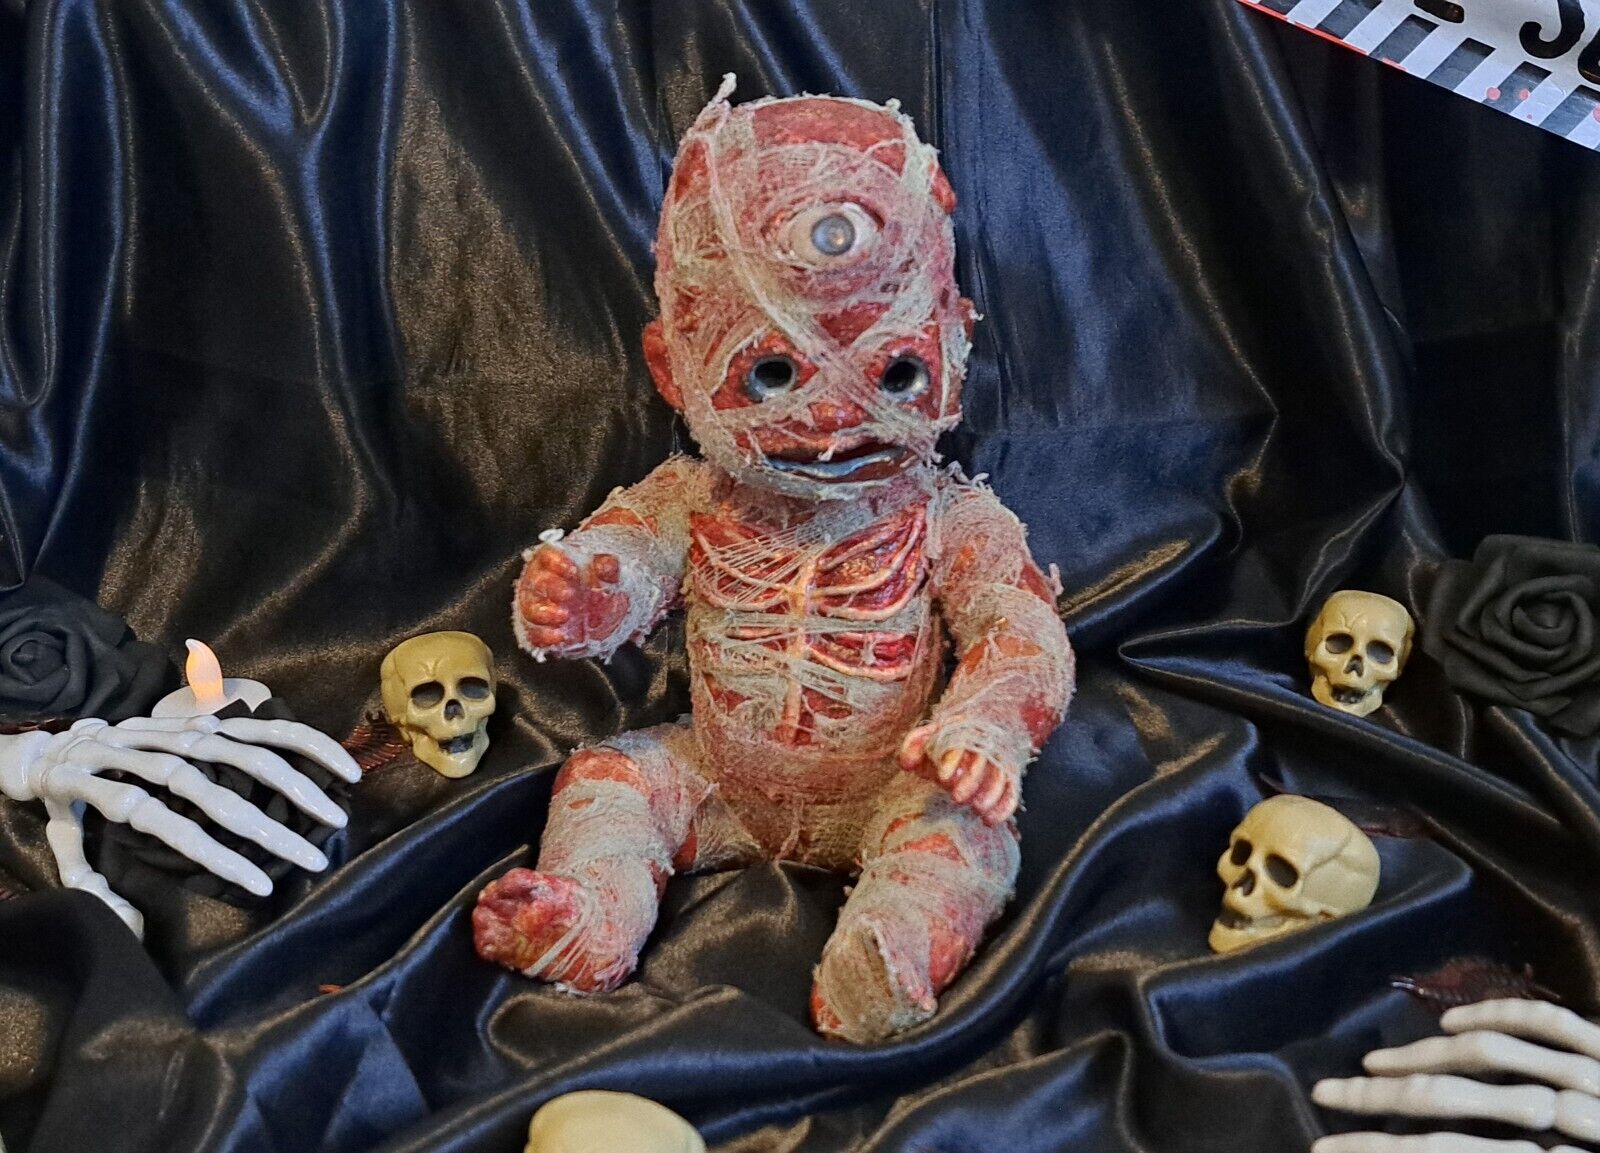 Handmade 3rd Eye Mummy Doll - Glow in Dark - Halloween/Horror - Vero Collection